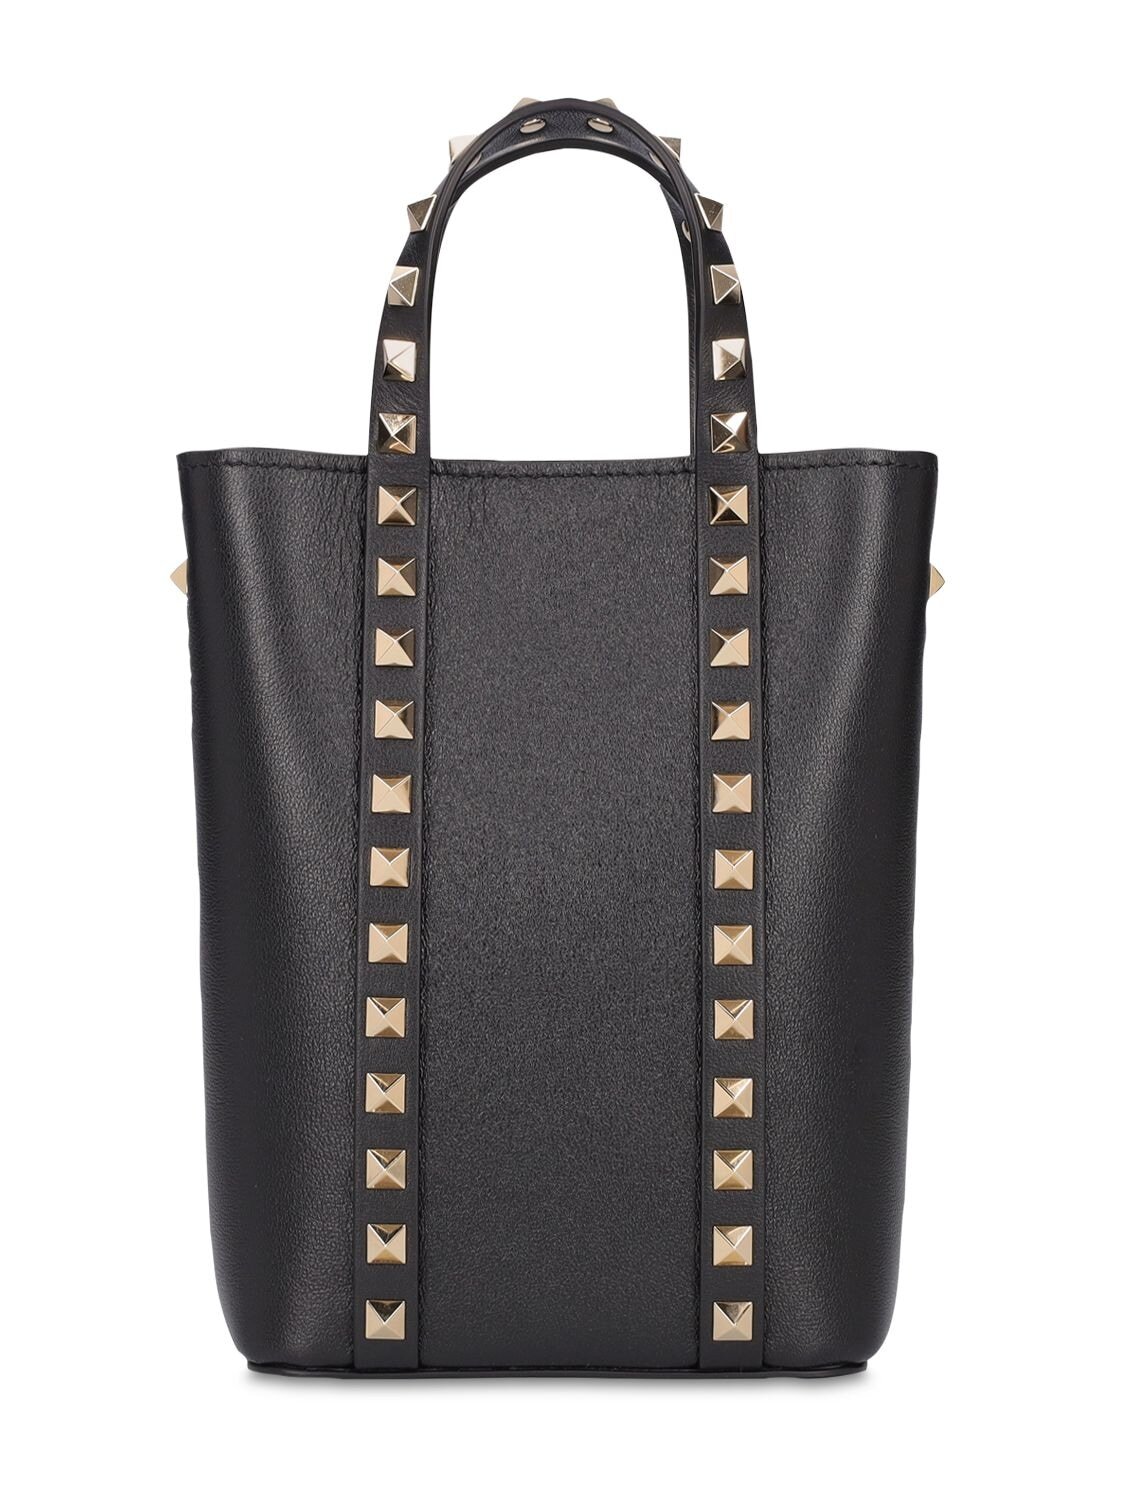 VALENTINO GARAVANI Rockstud Leather Top Handle Bag in black